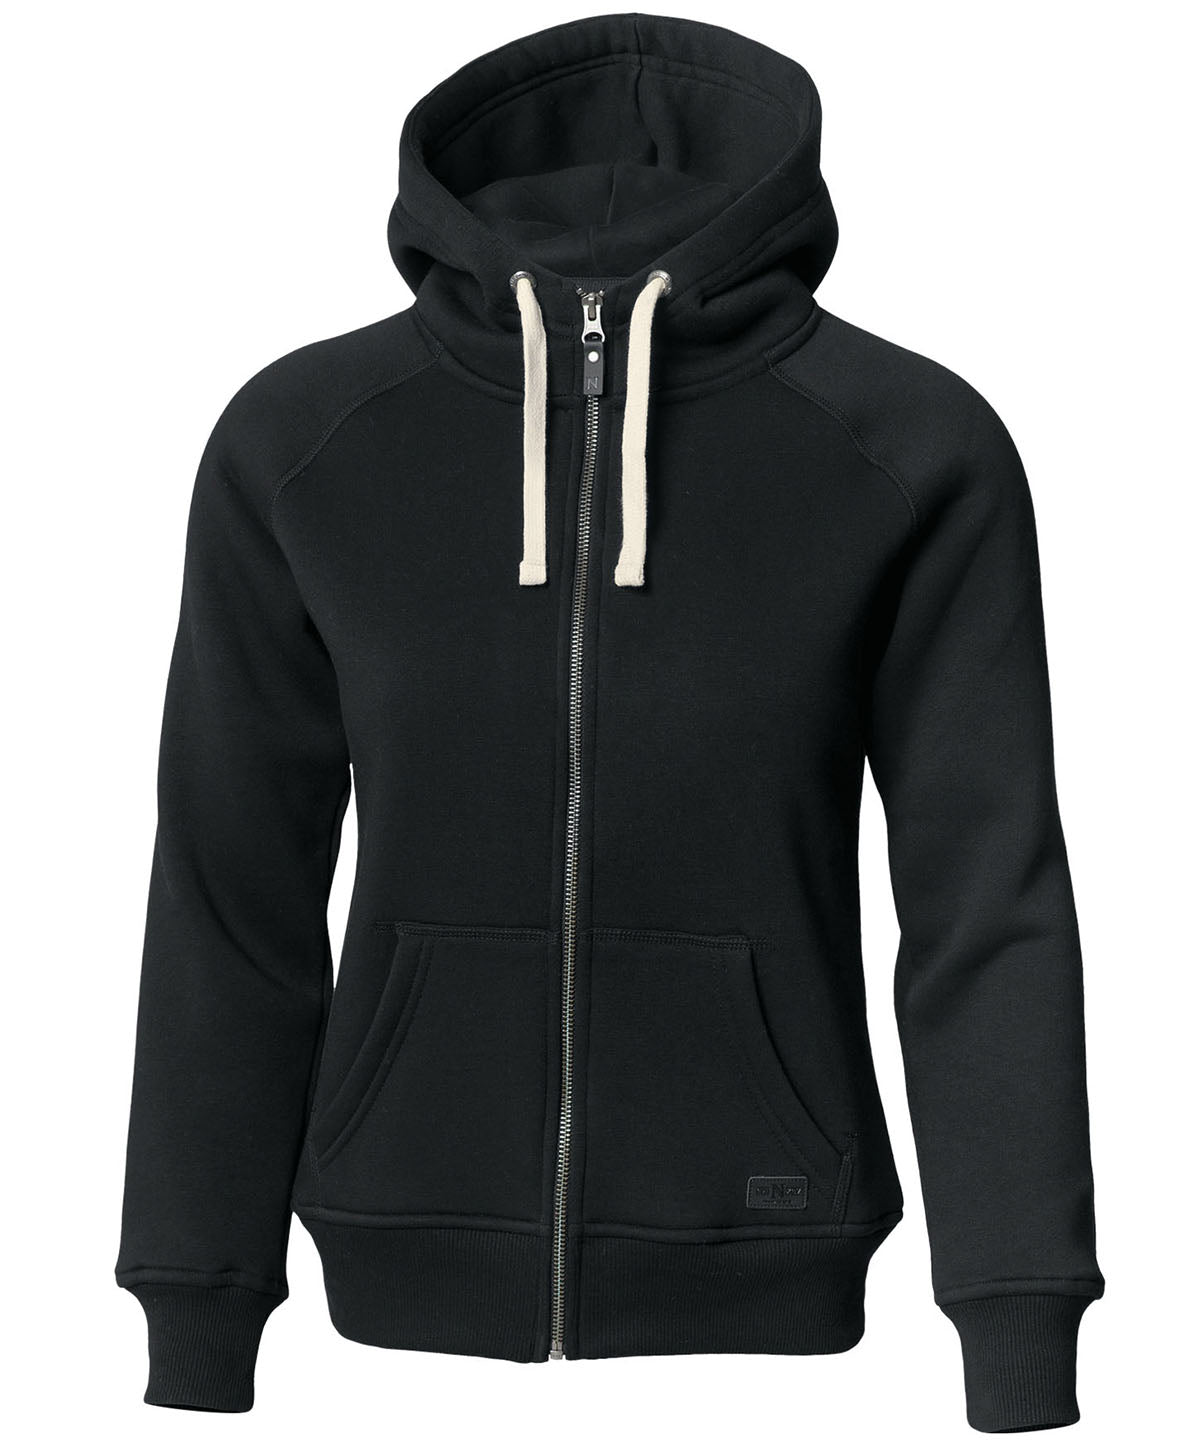 Personalised Hoodies - Black Nimbus Women’s Williamsburg – fashionable hooded sweatshirt